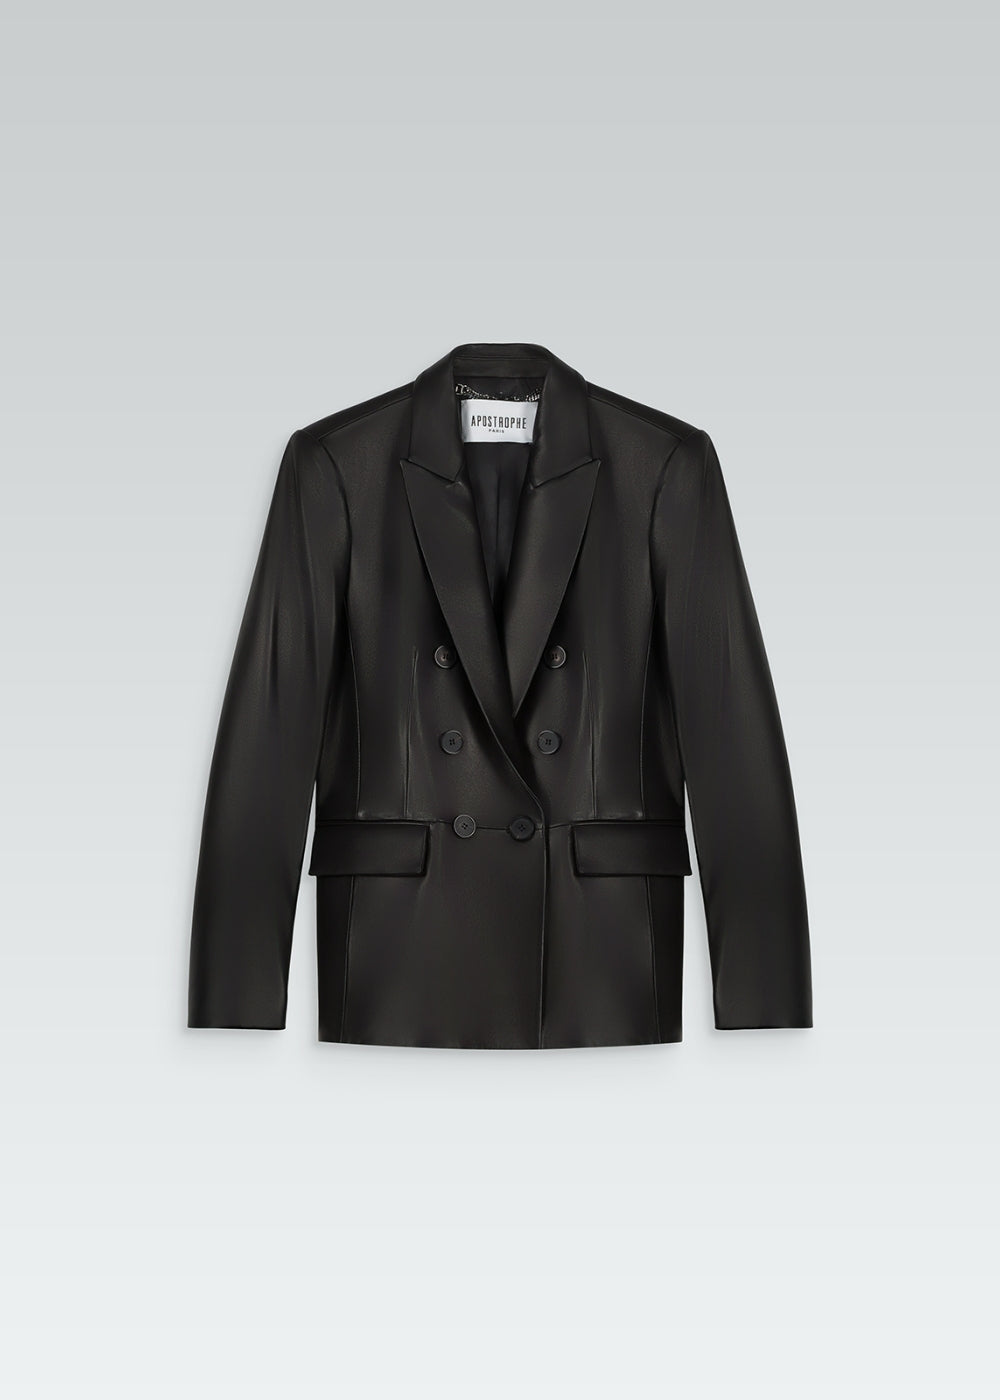 Black leather tailored jacket